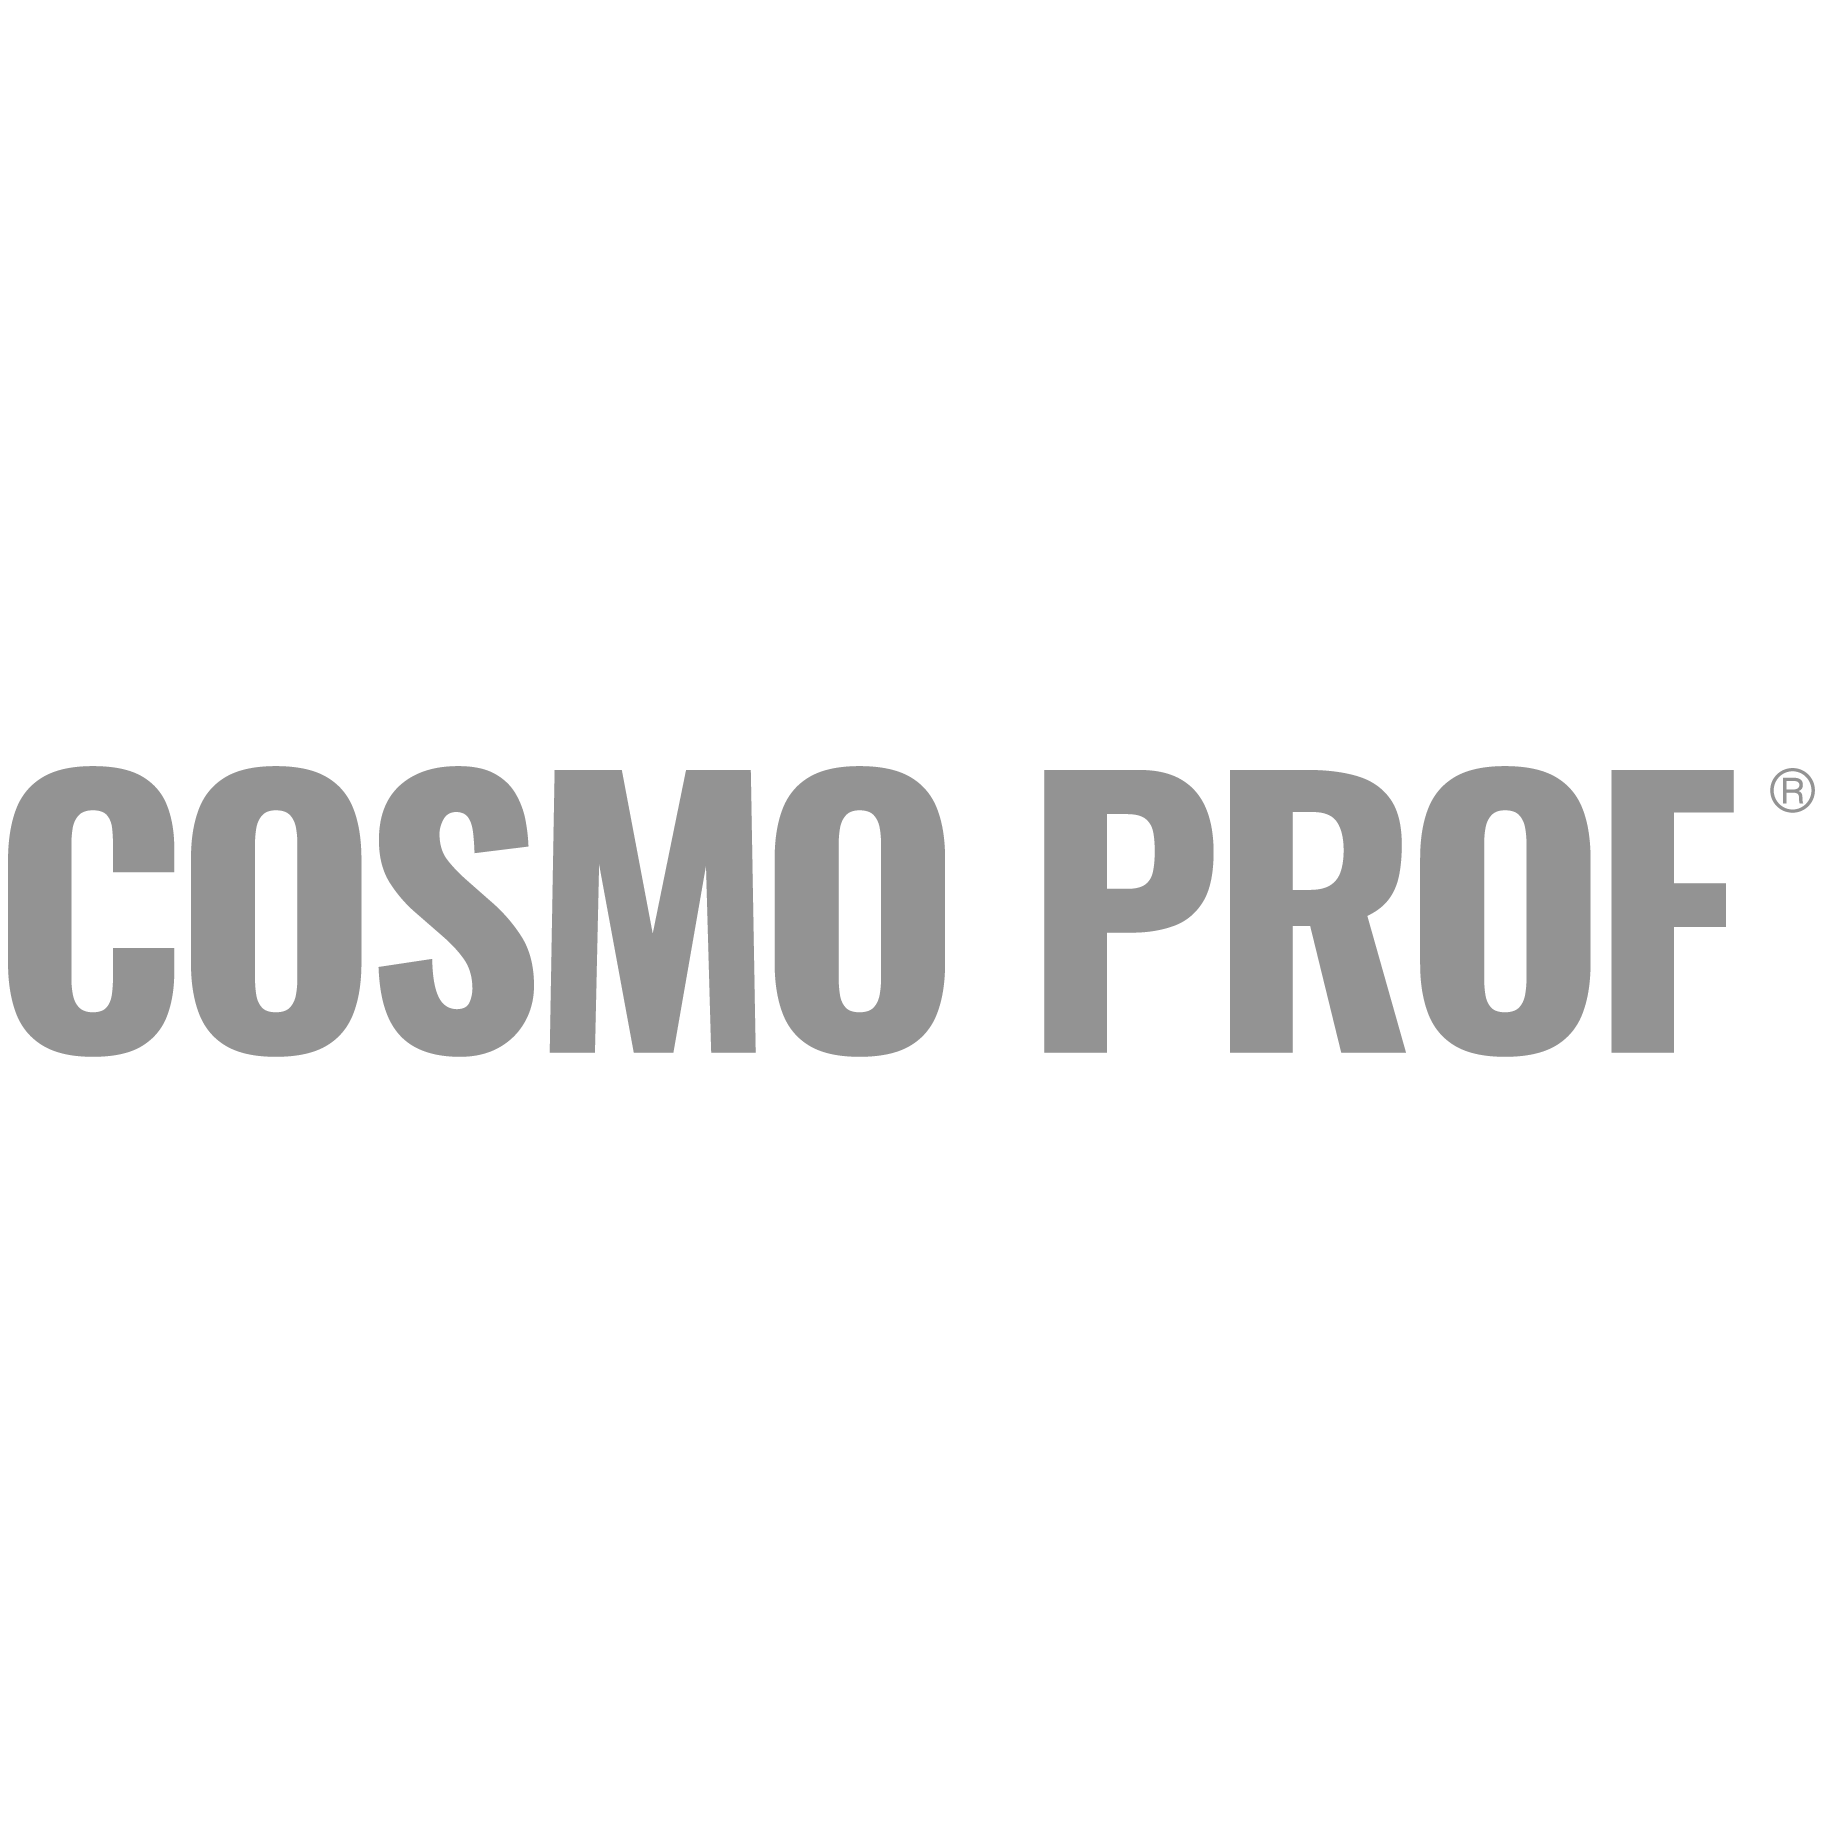 Cosmo Prof logo